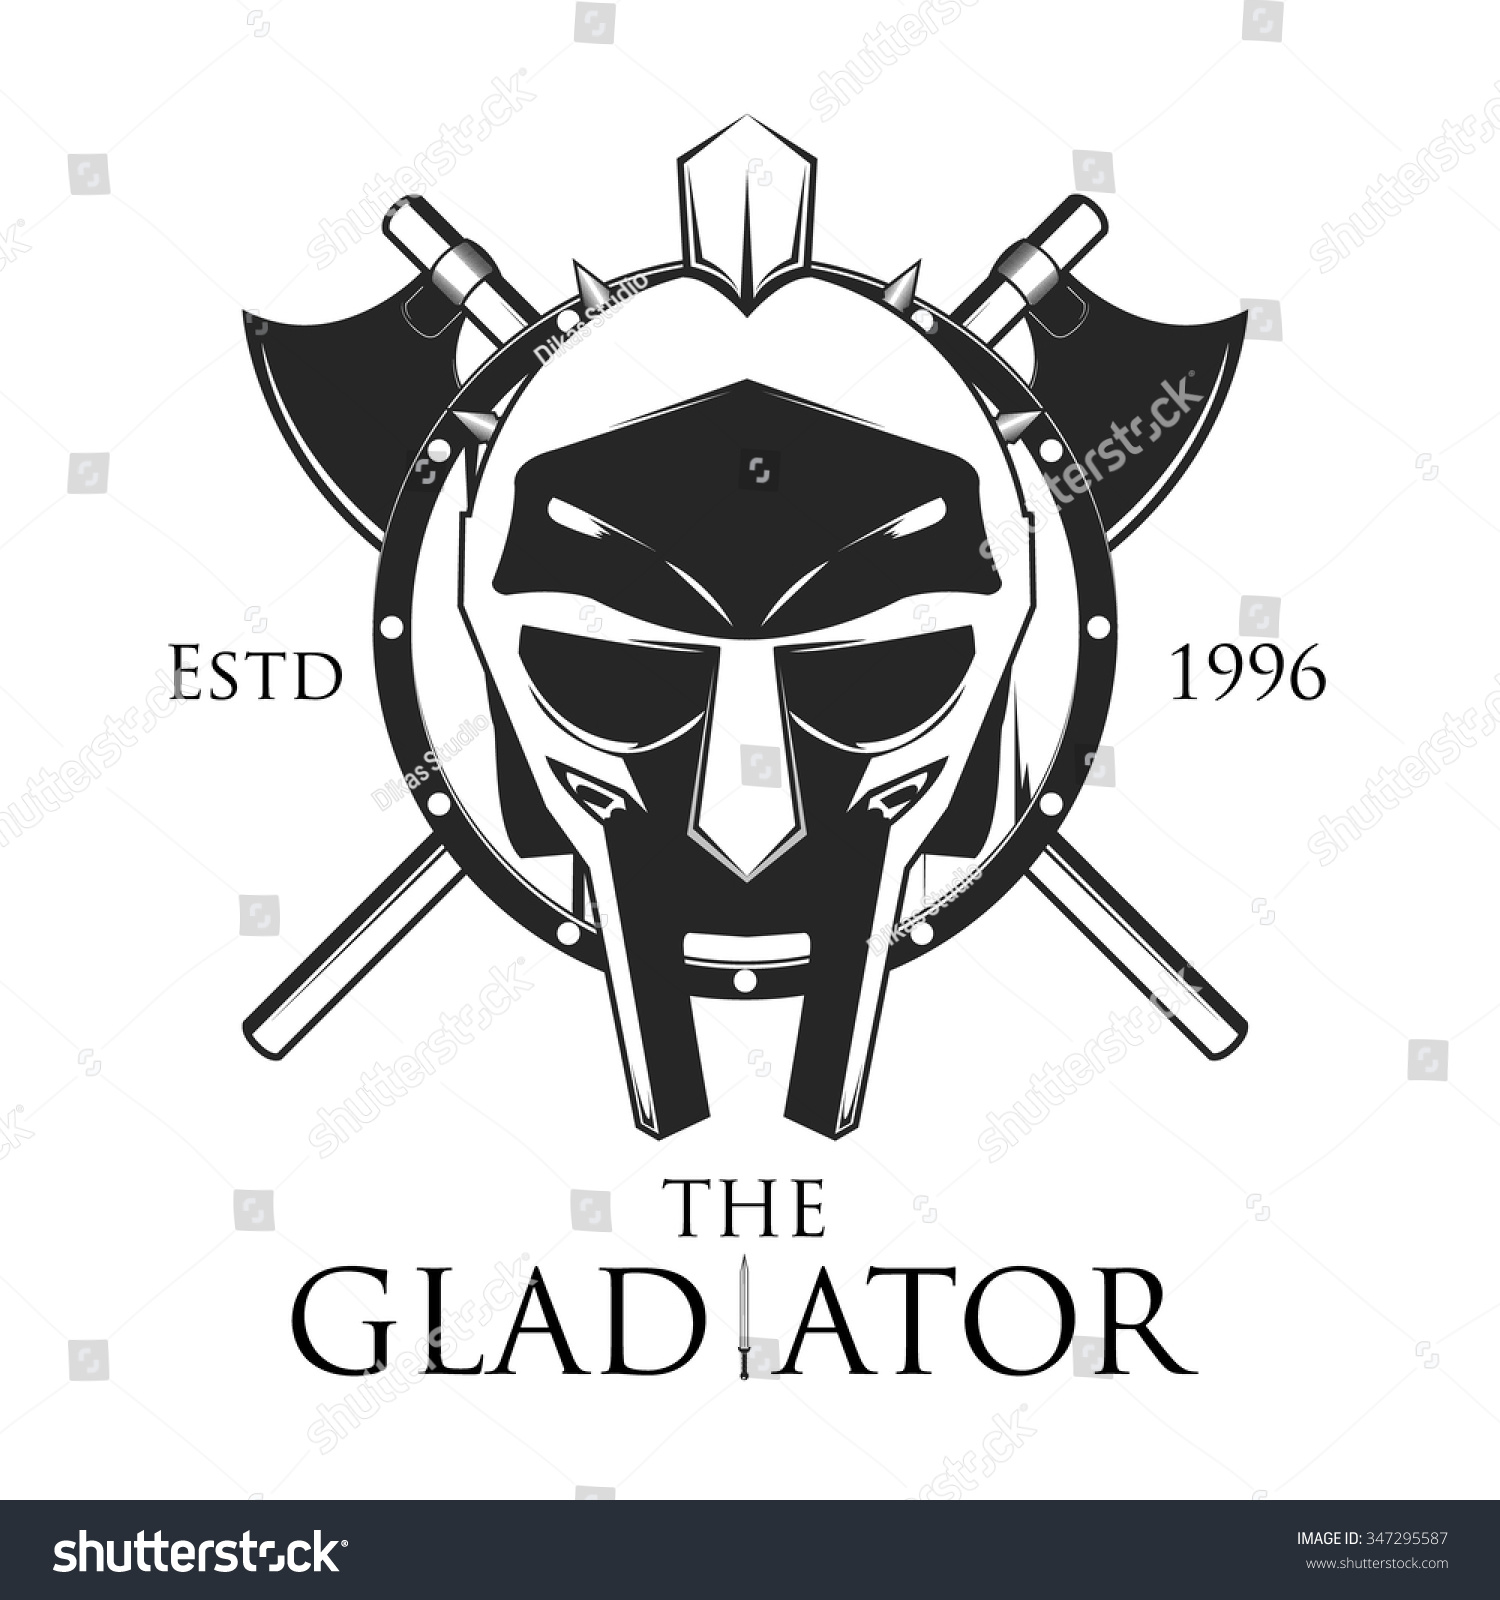 Gladiator Shield With Crossed Axe Vector Illustration, Logo Design ...